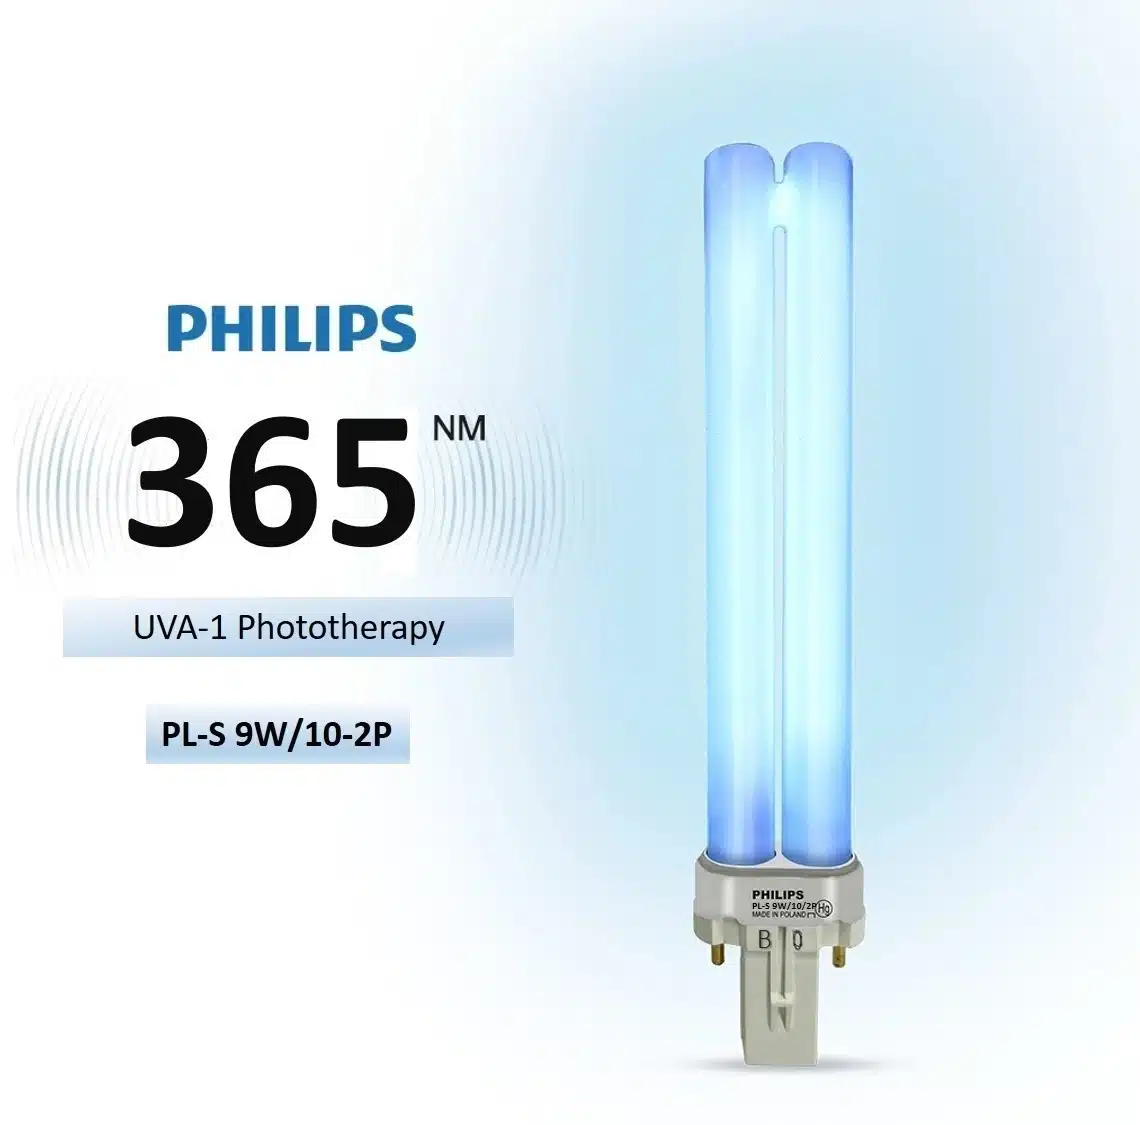 Philips-UVA1-PL-S-9W-10-2P-9-watt-phototherapy-replacement-lamp